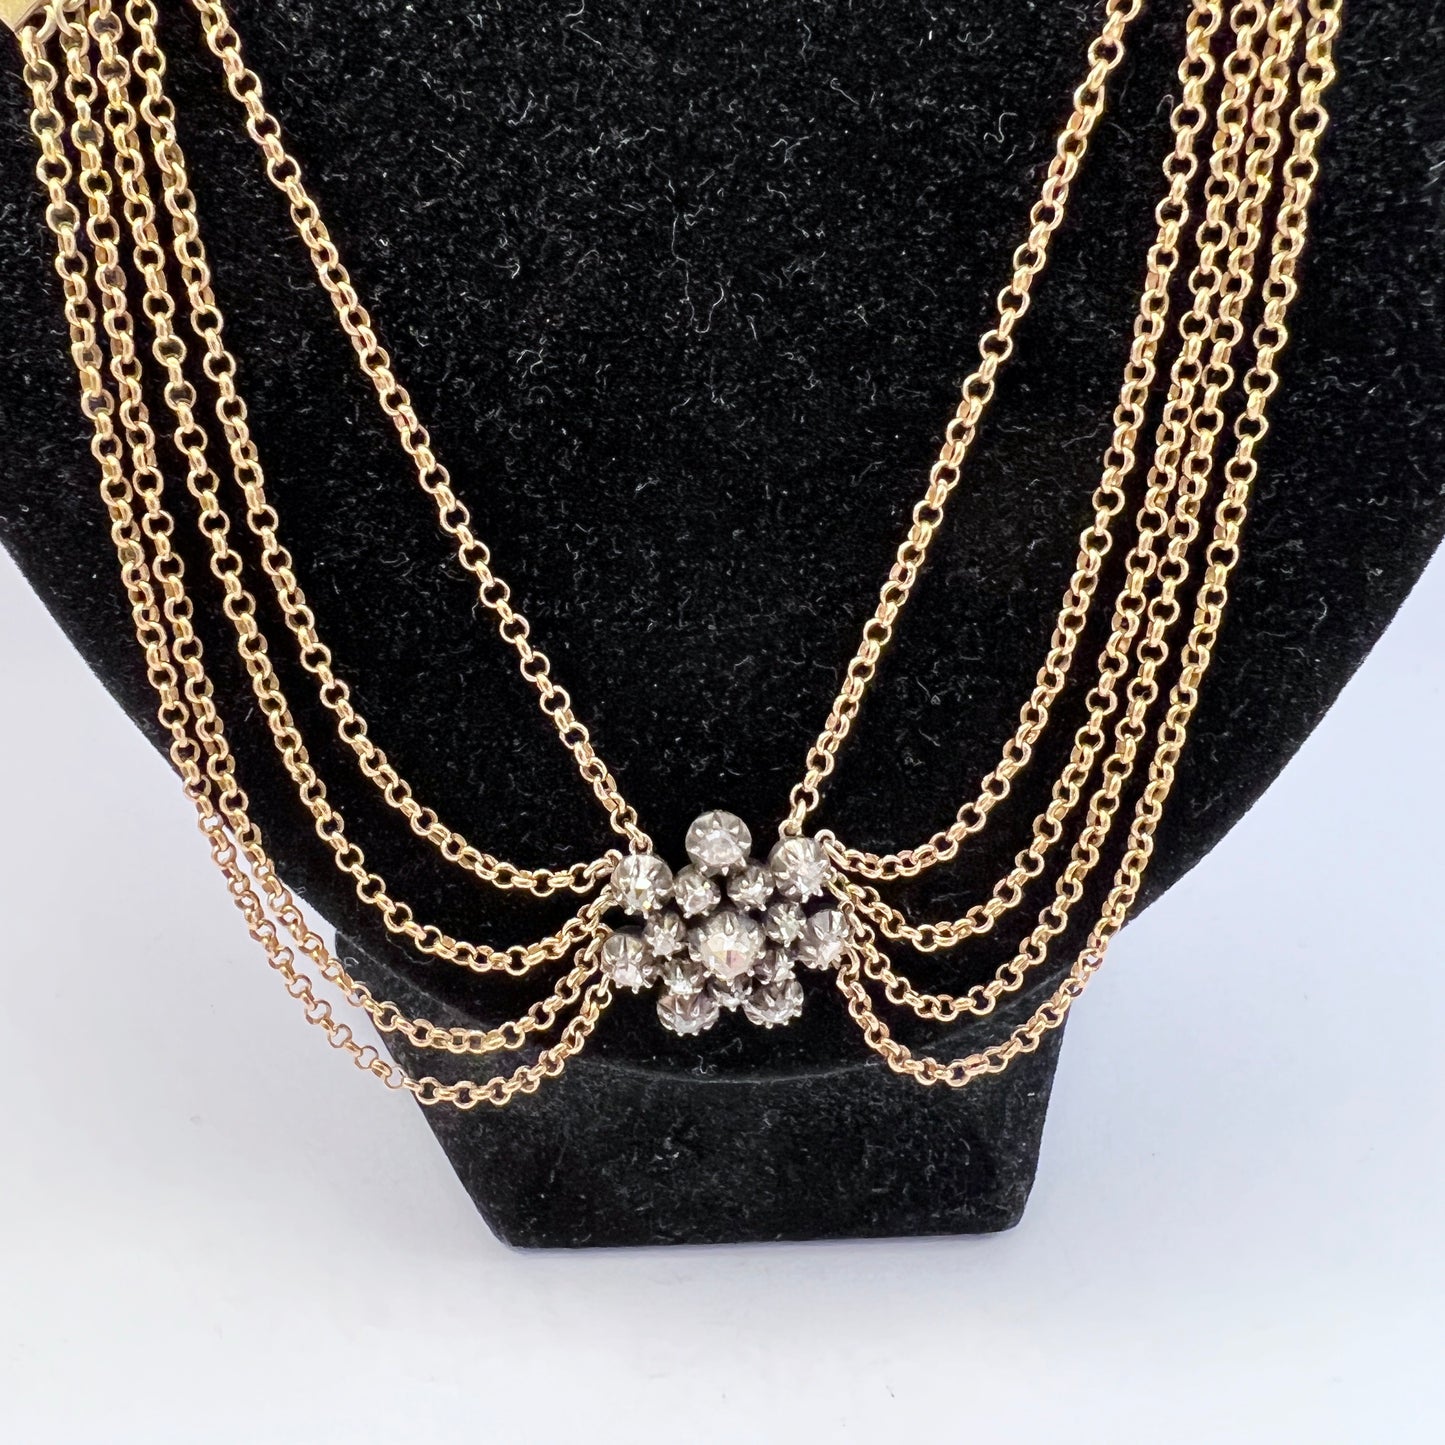 Antique 18k Gold Rose Cut Diamond Cluster Esclavage Necklace. Early 1900s. 25.2gram